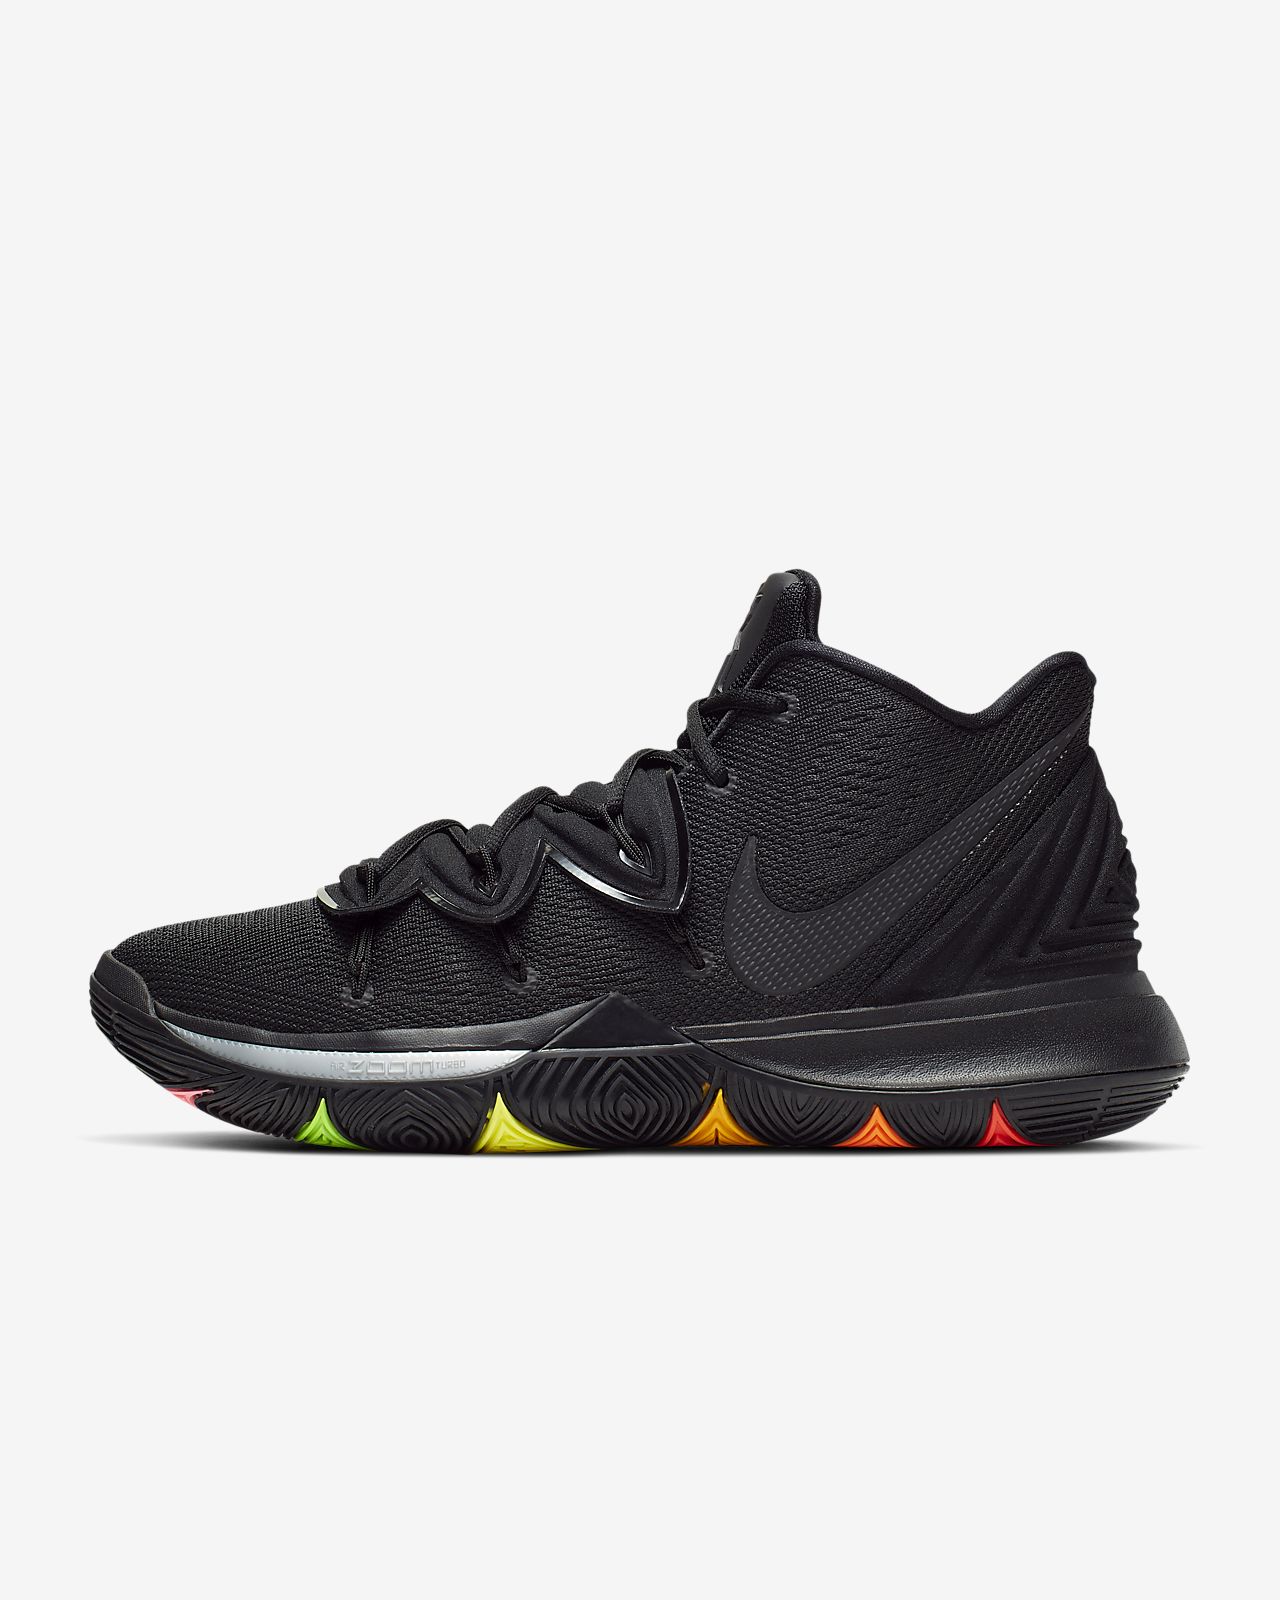 kyrie 5 basketball shoes black